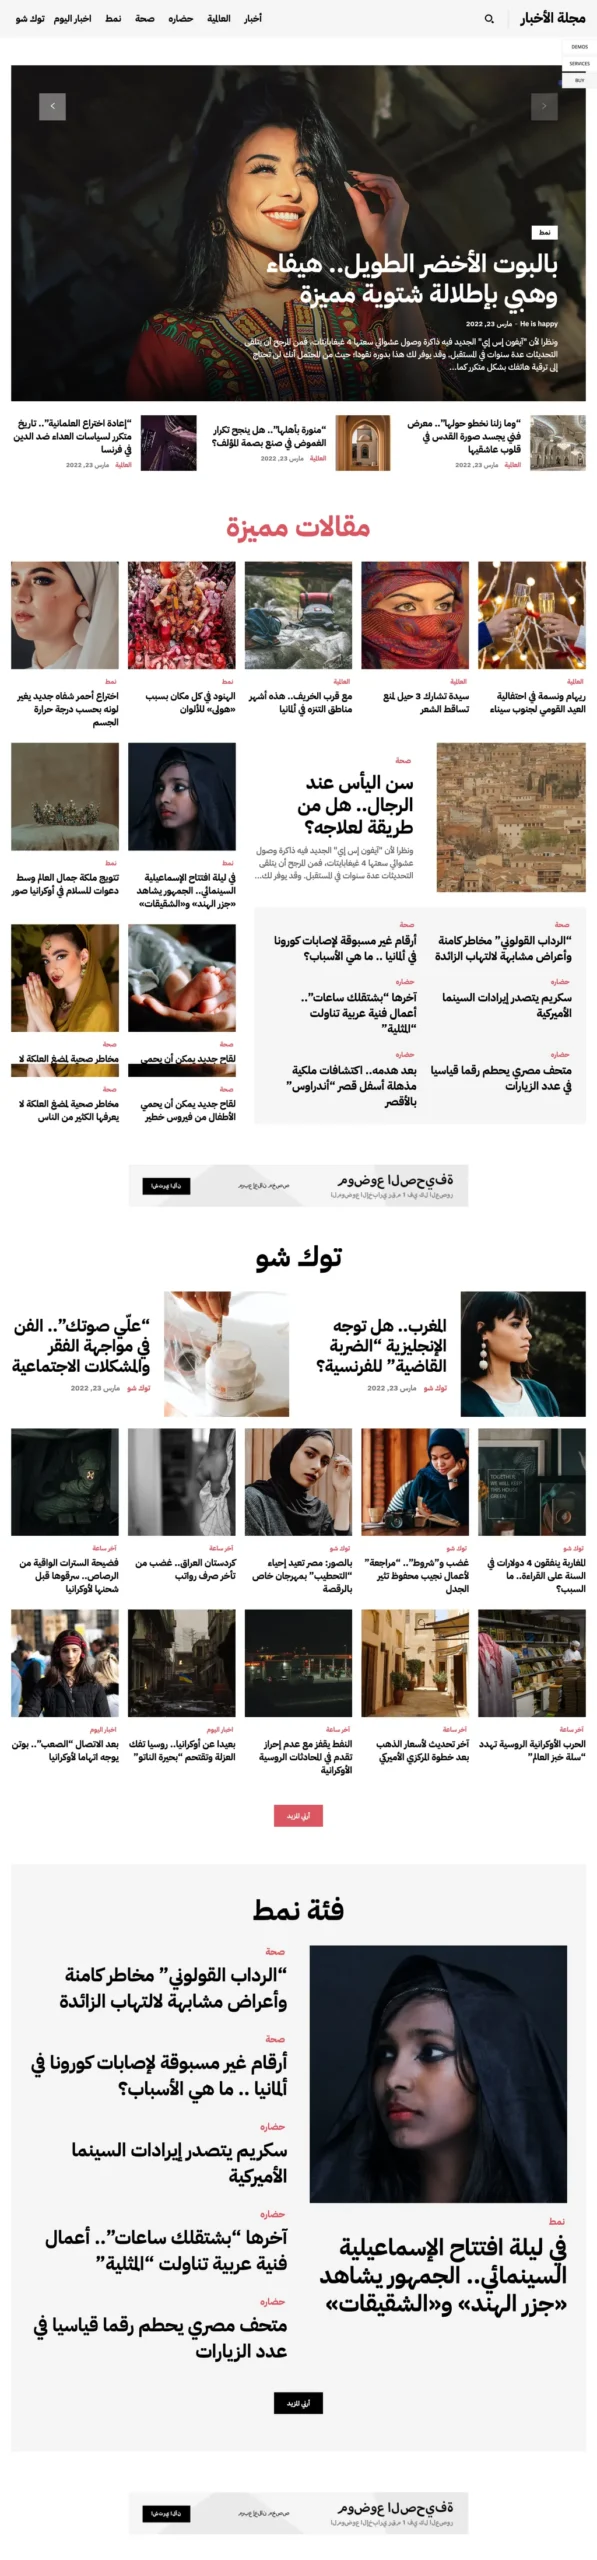 Arabic News Website Design with Free 5GB VPS Web Hosting